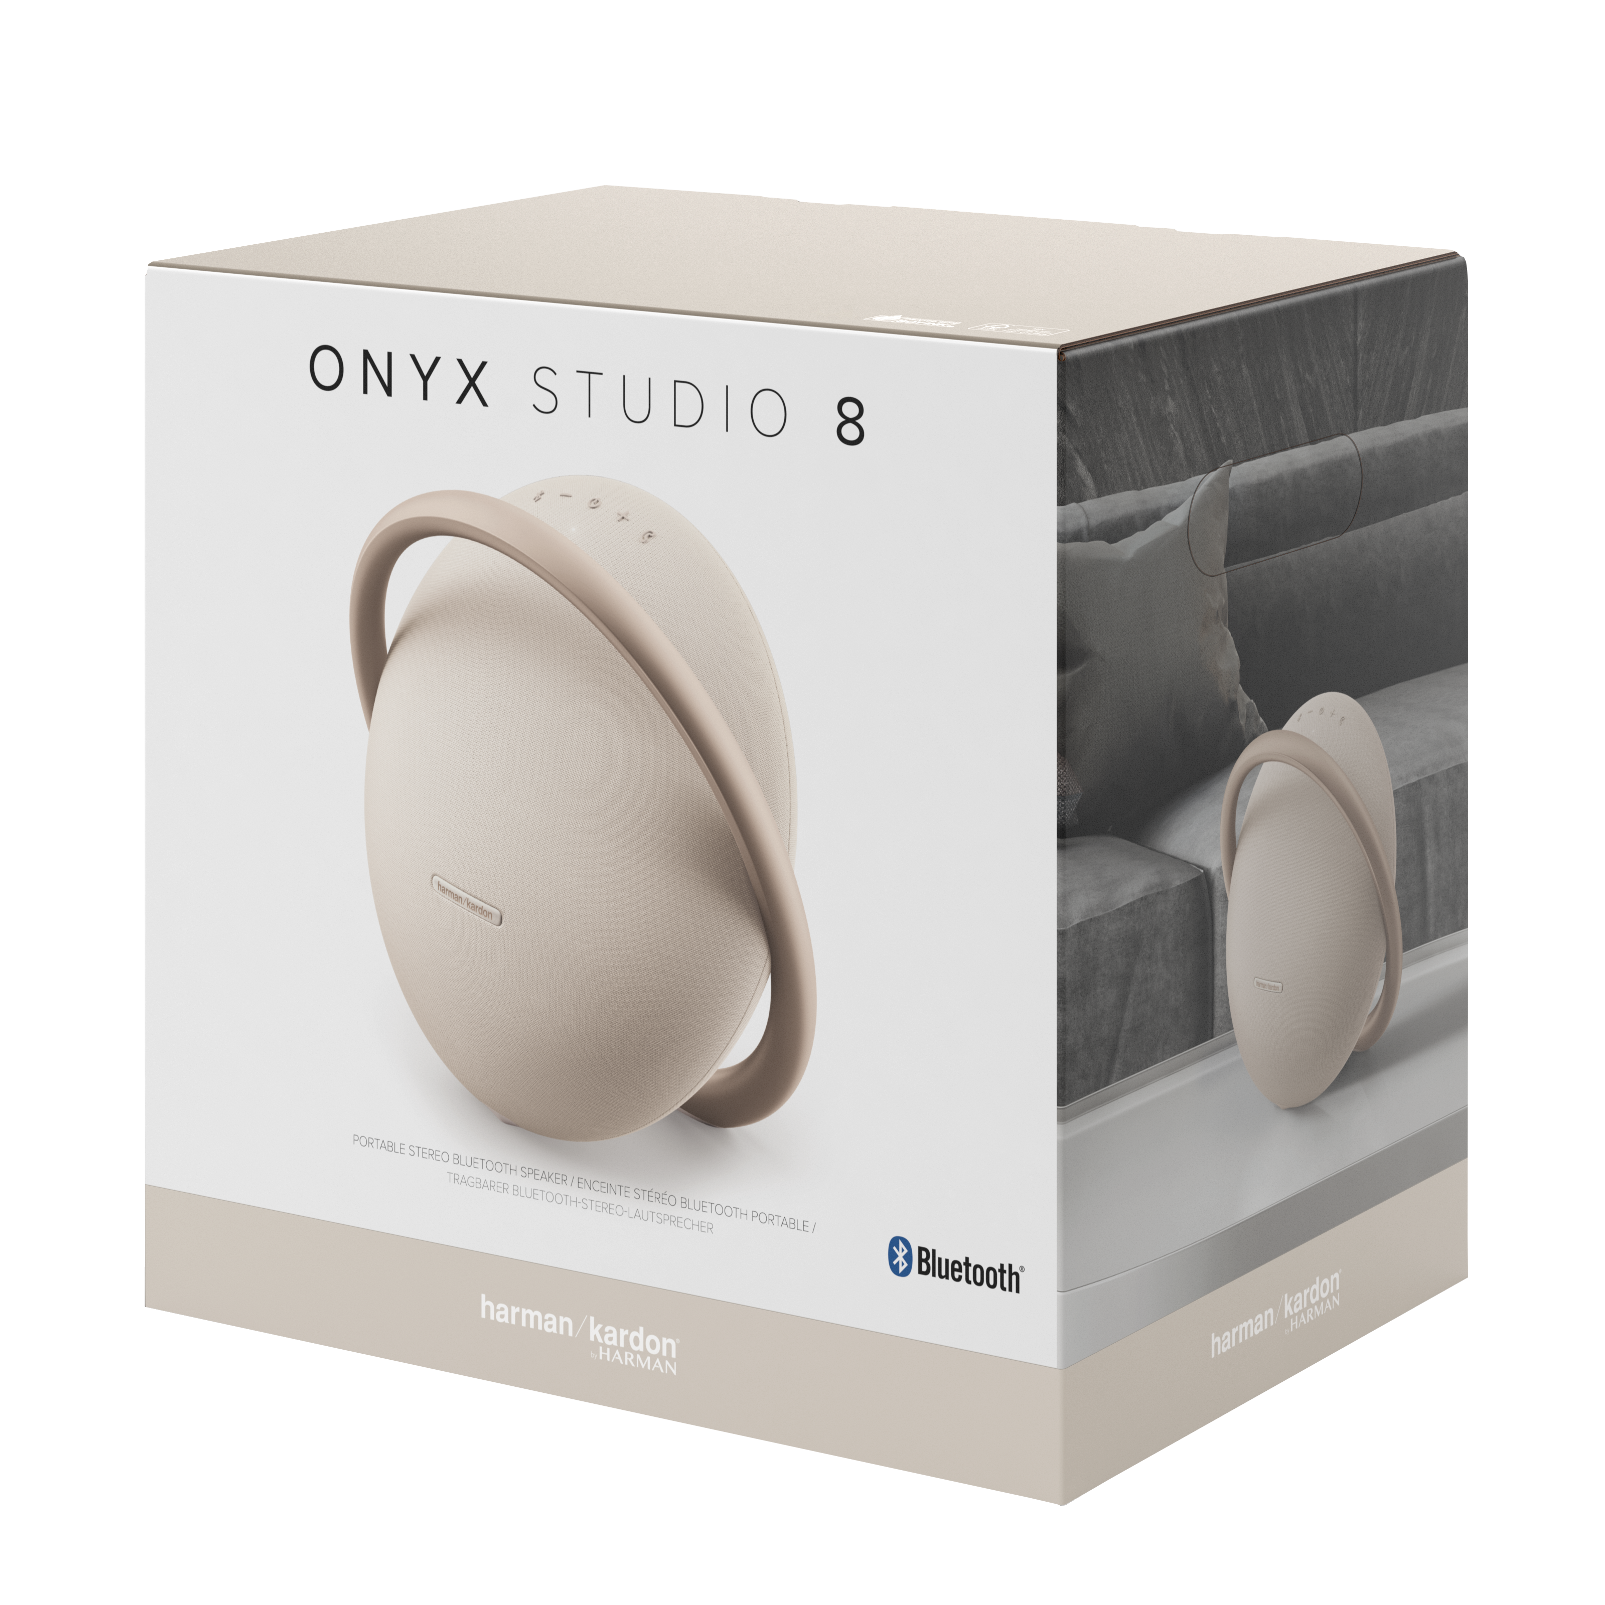 8 Studio Portable Bluetooth Onyx stereo Kardon Harman speaker |